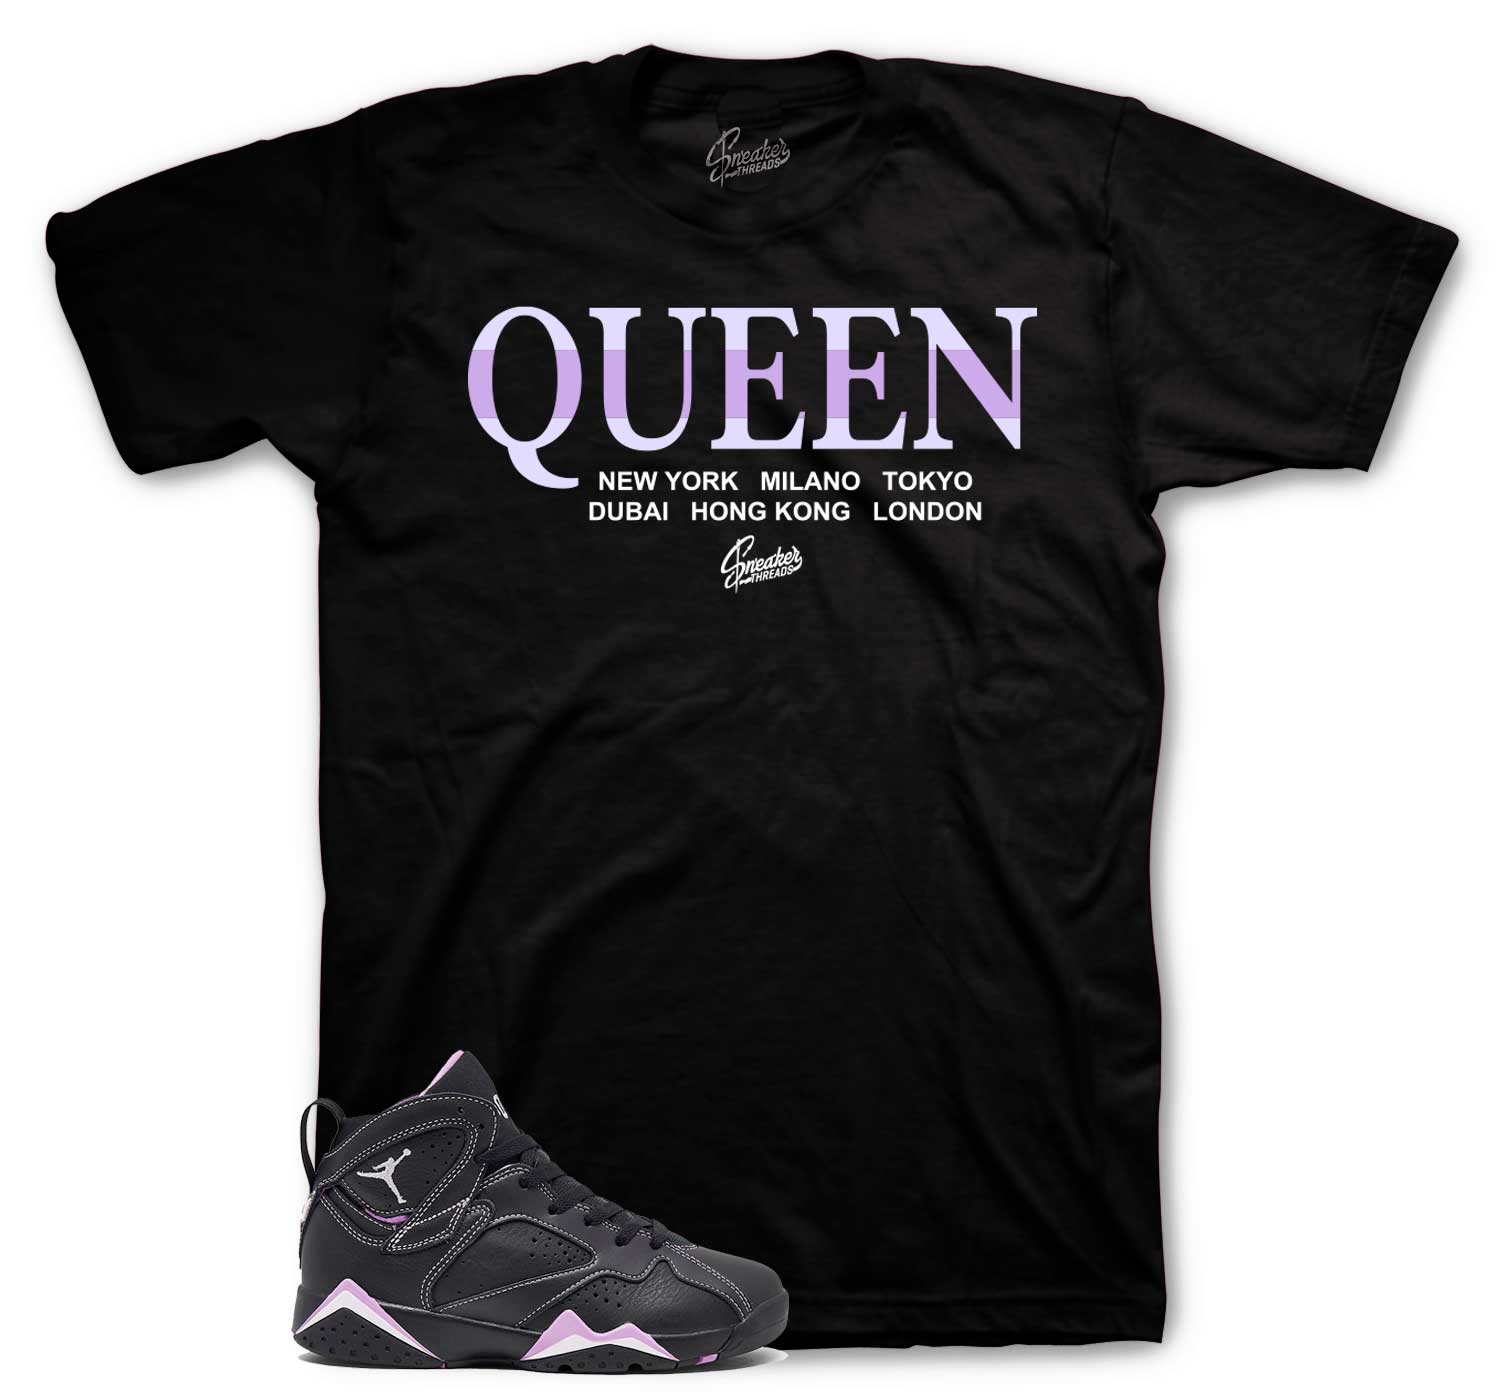 Retro 7 Barely Grape Shirt - Worldwide - Black